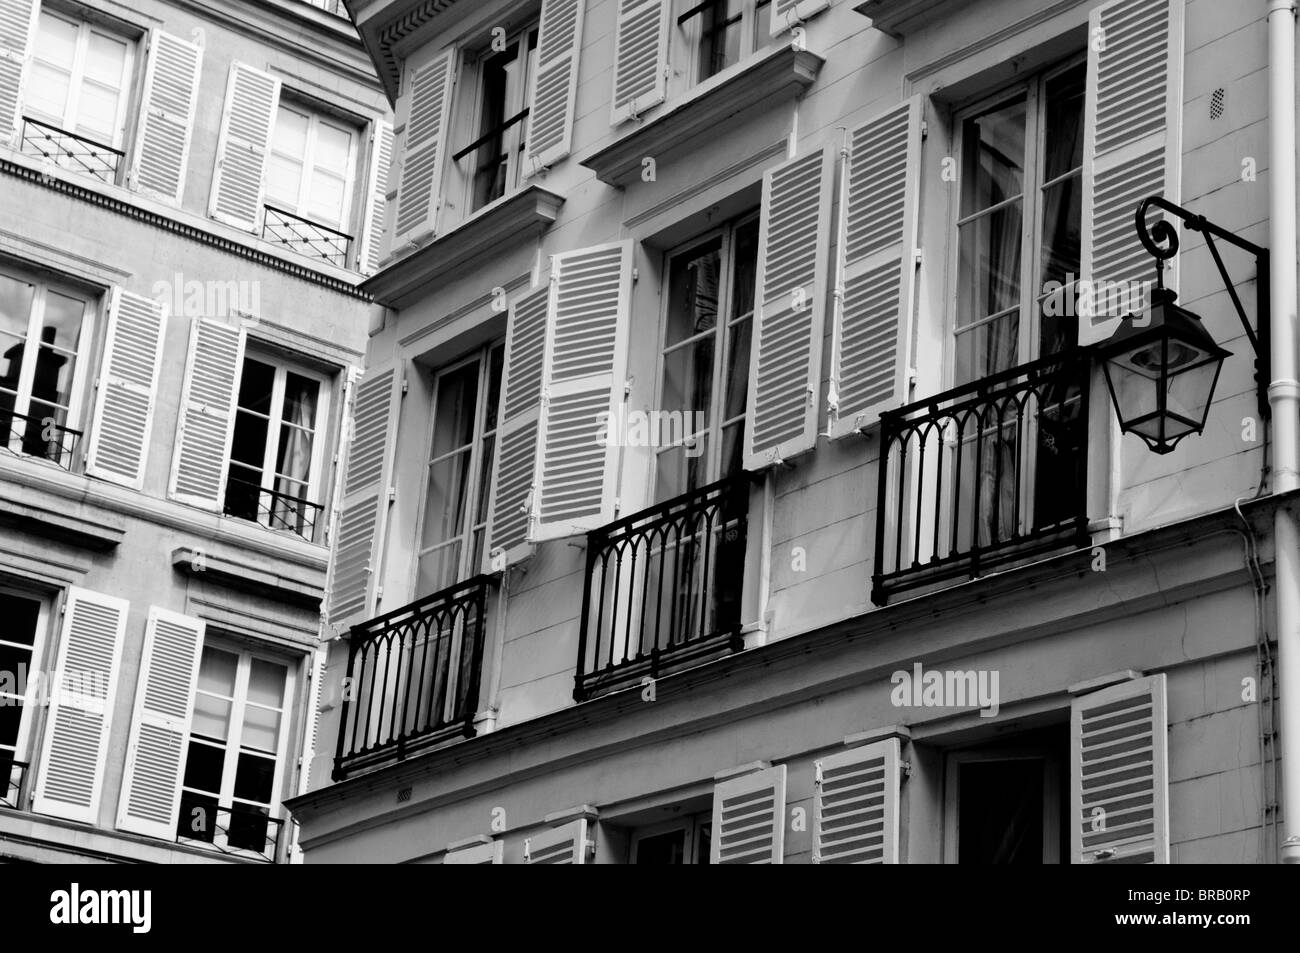 Residential mansions, St Germain des Pres, Paris, France Stock Photo